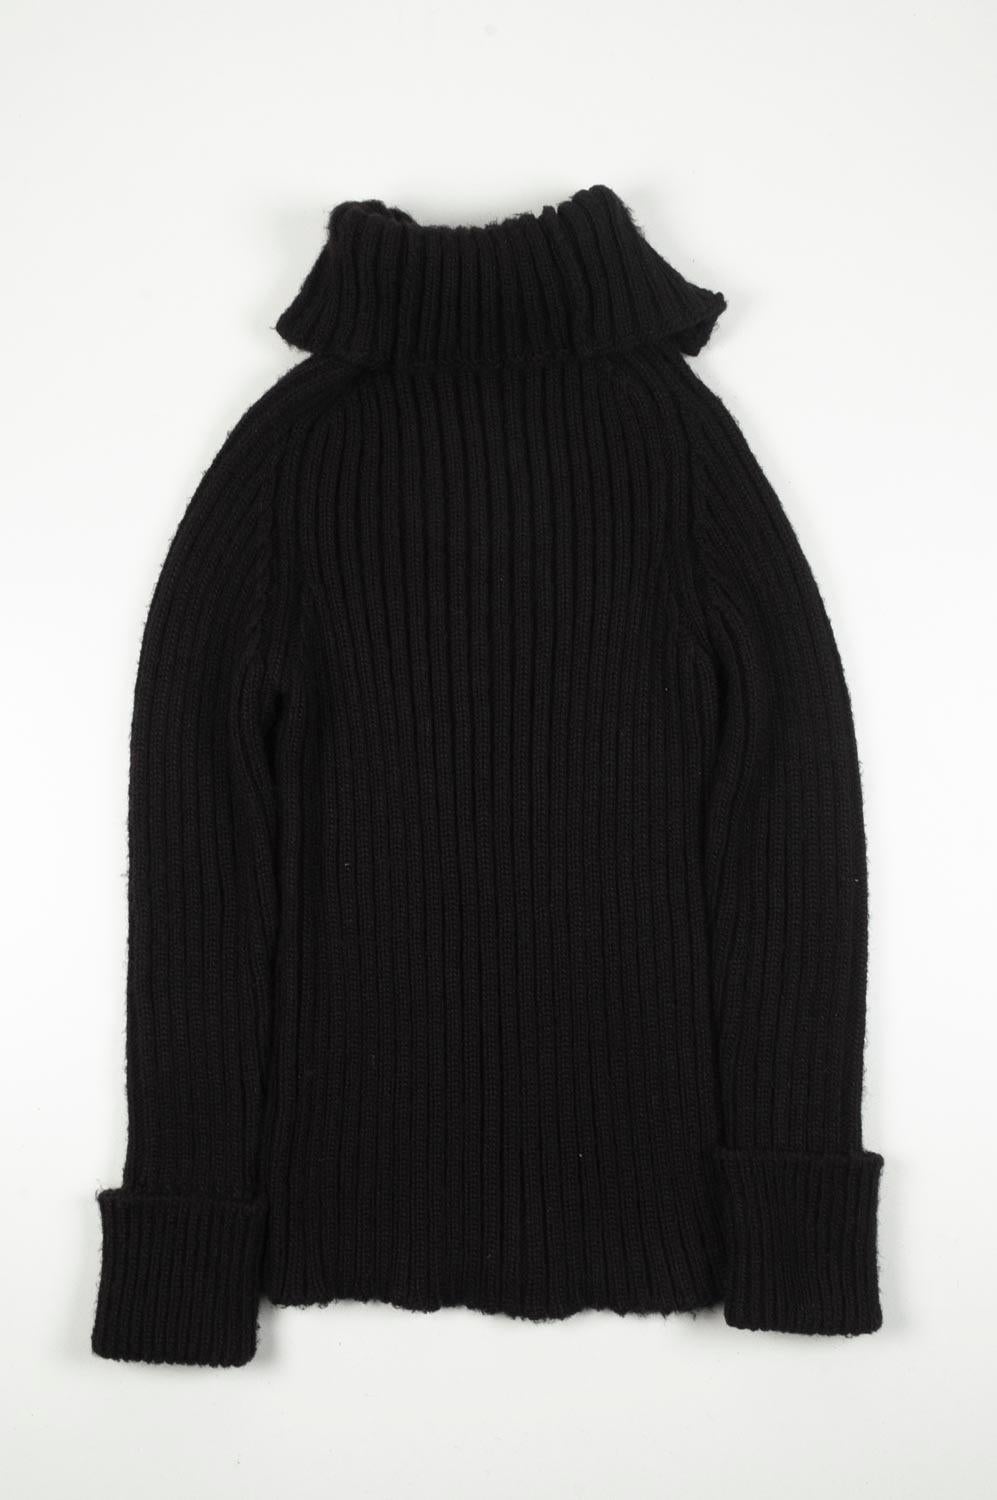 Yohji Yamamoto Pour Homme Turtle Neck Men Heavy Sweater Size 4, (L/XL)S527 For Sale 1